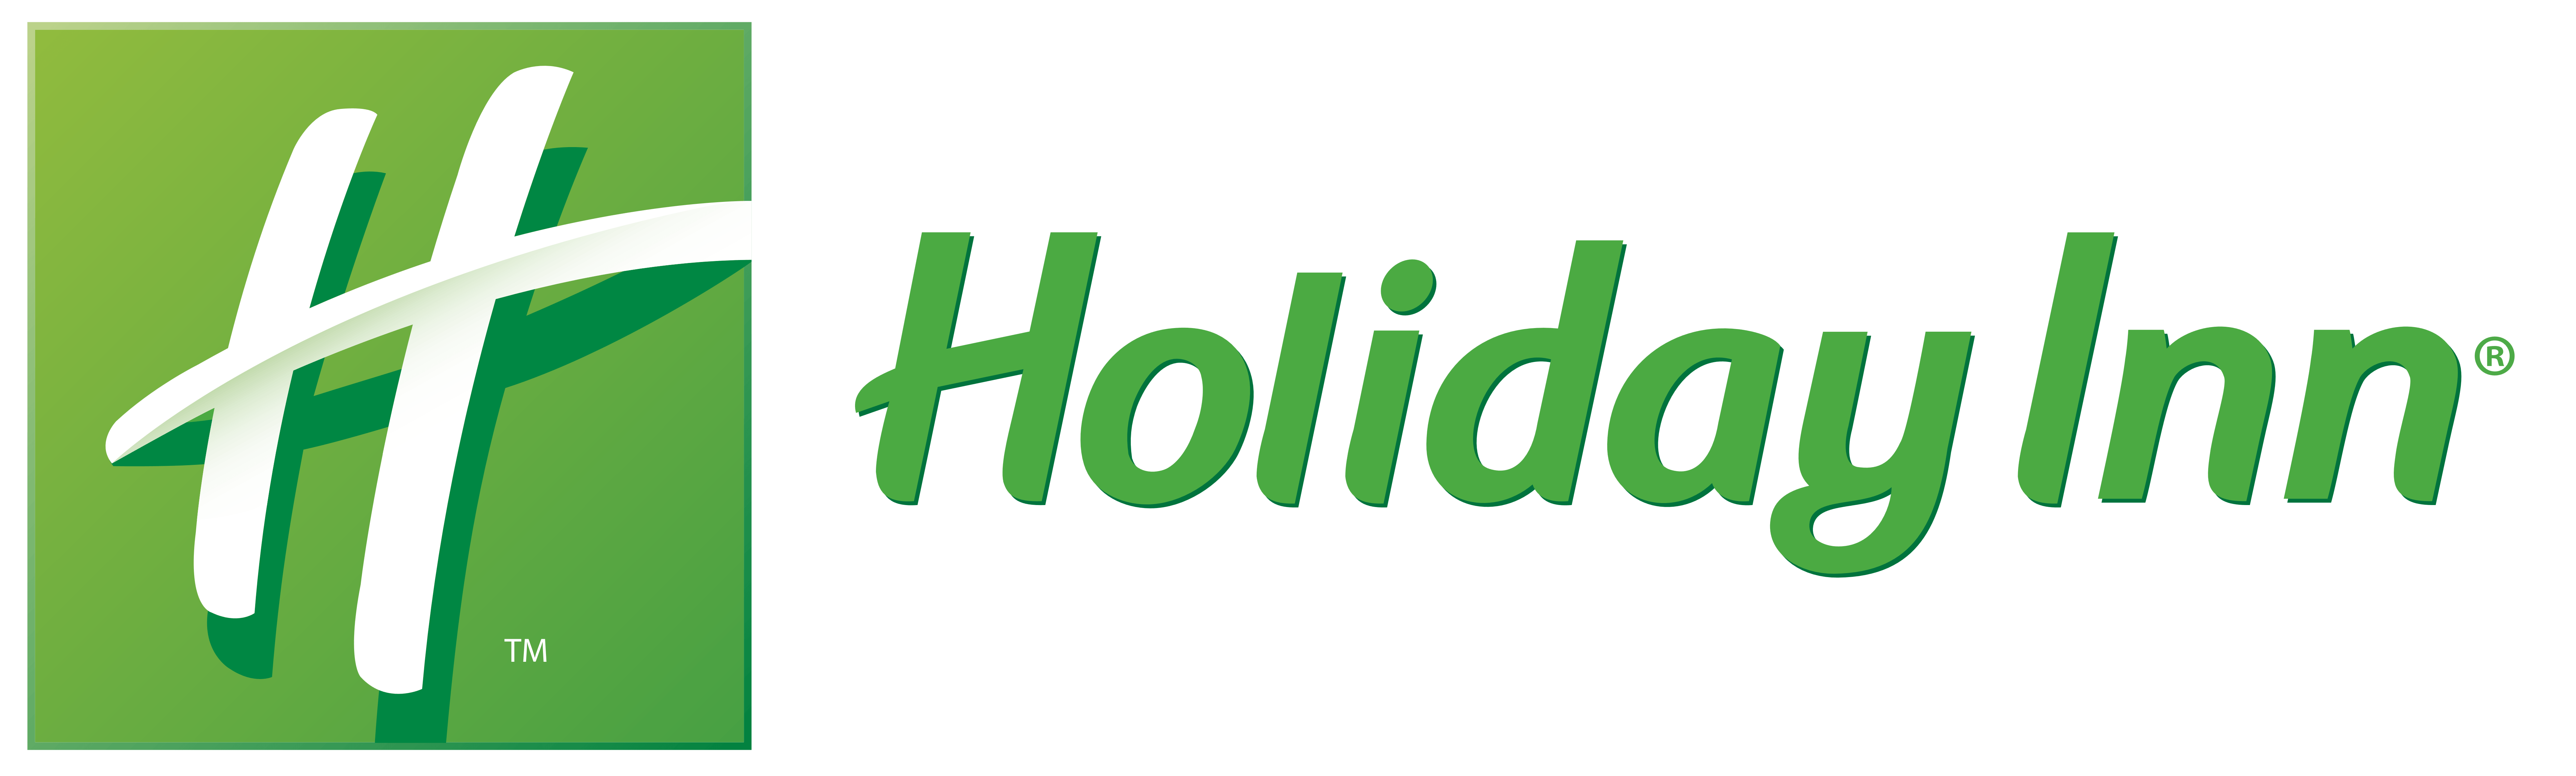 Holiday Inn Logo LogoDix